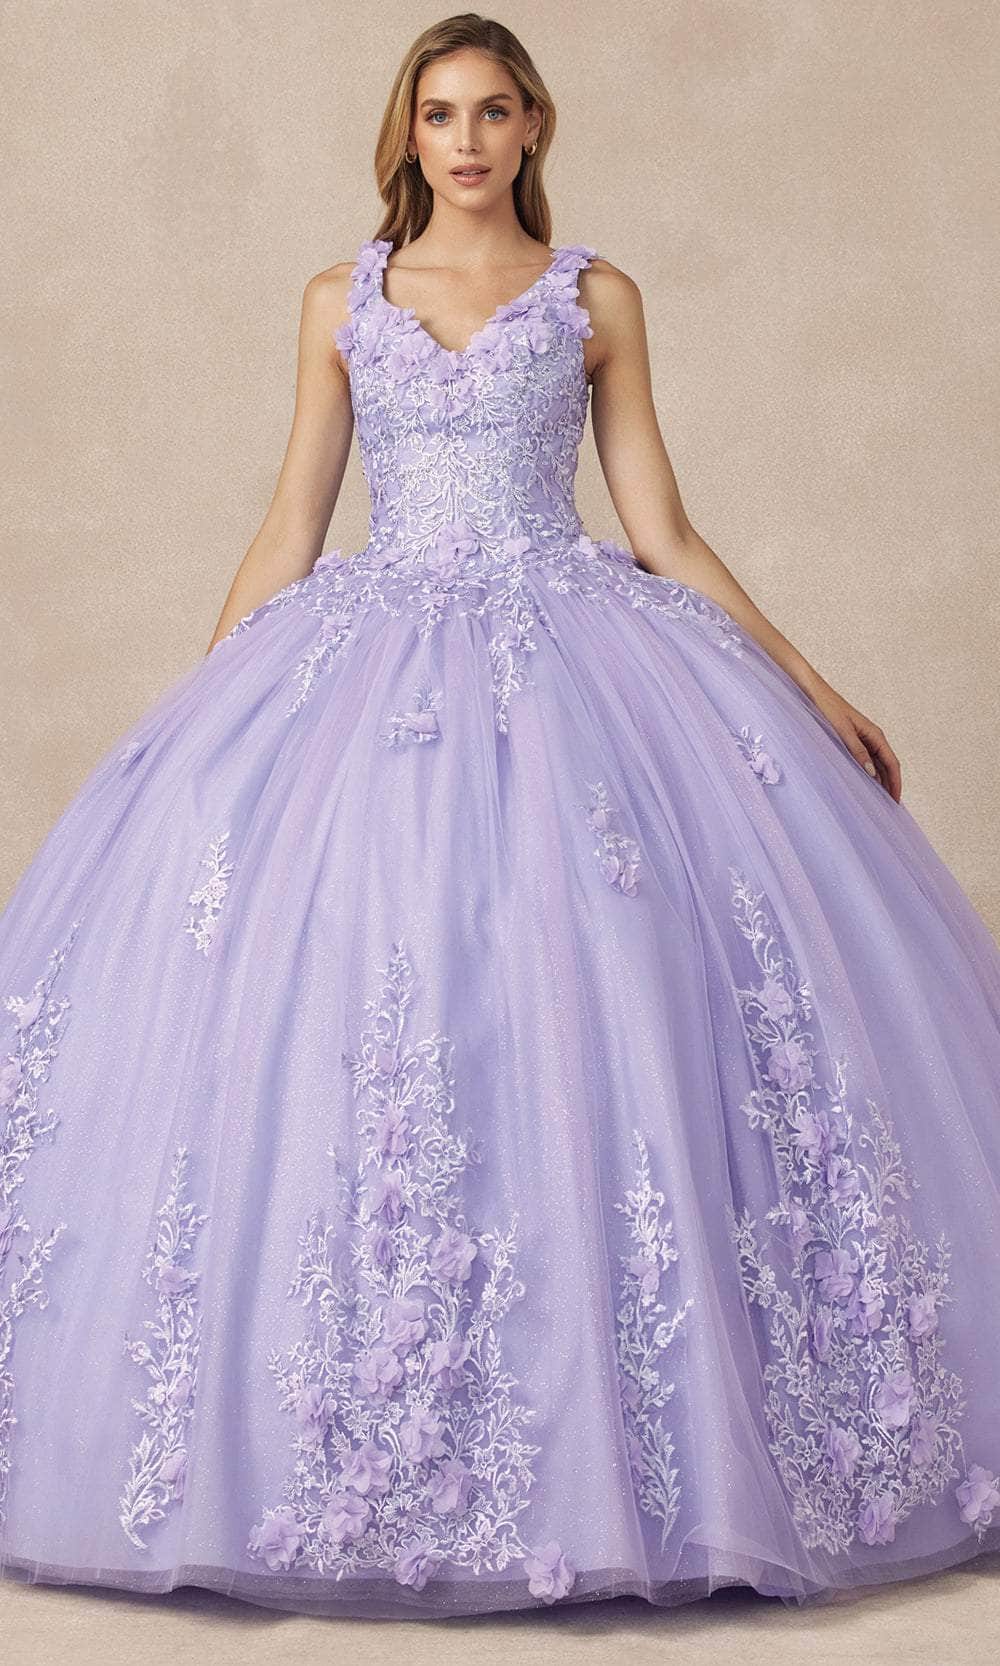 Image of Juliet Dresses 1437 - Floral Applique Ball Gown